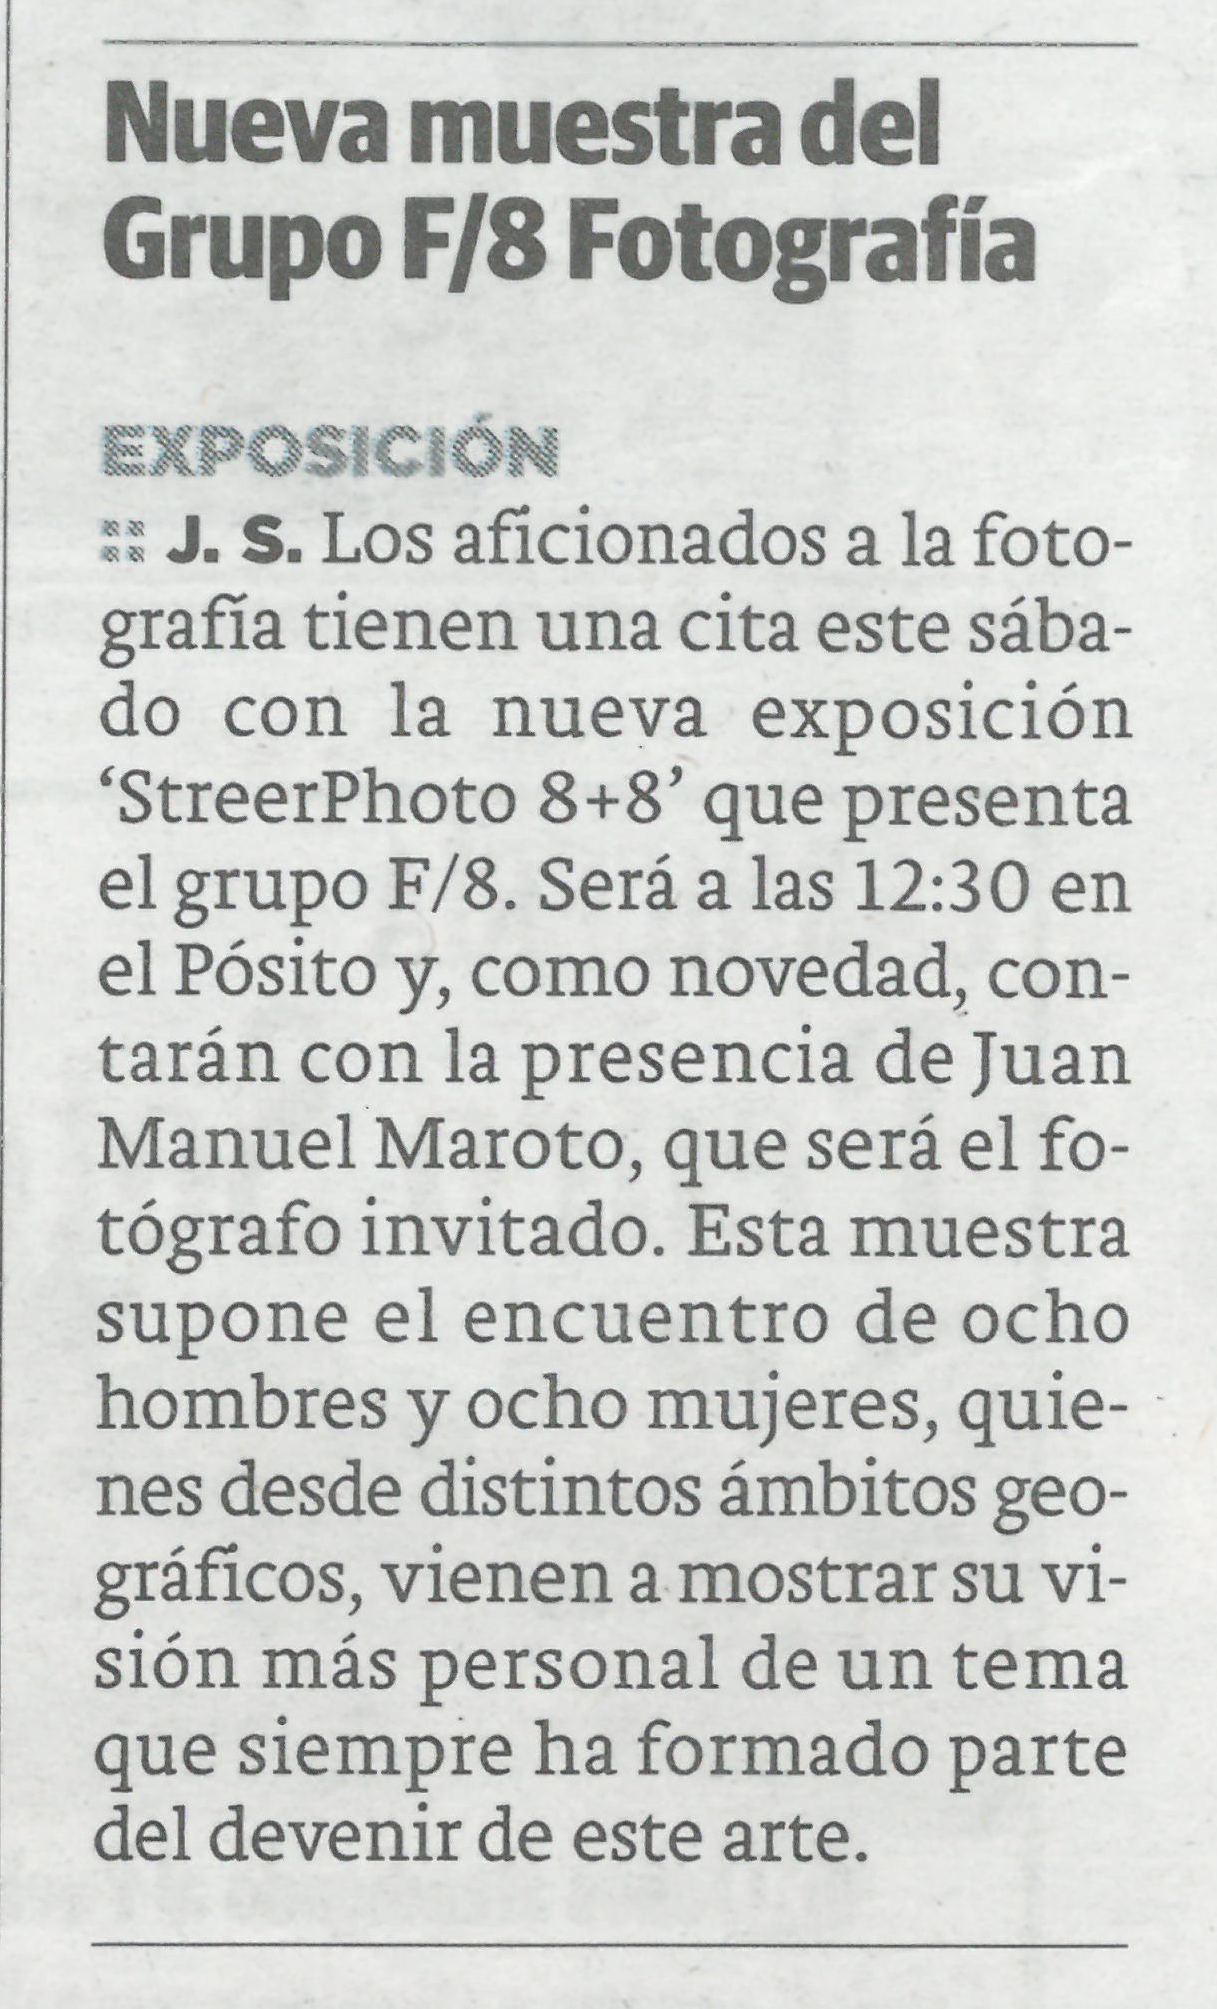 Diario Ideal - "Streetphoto 8+8"